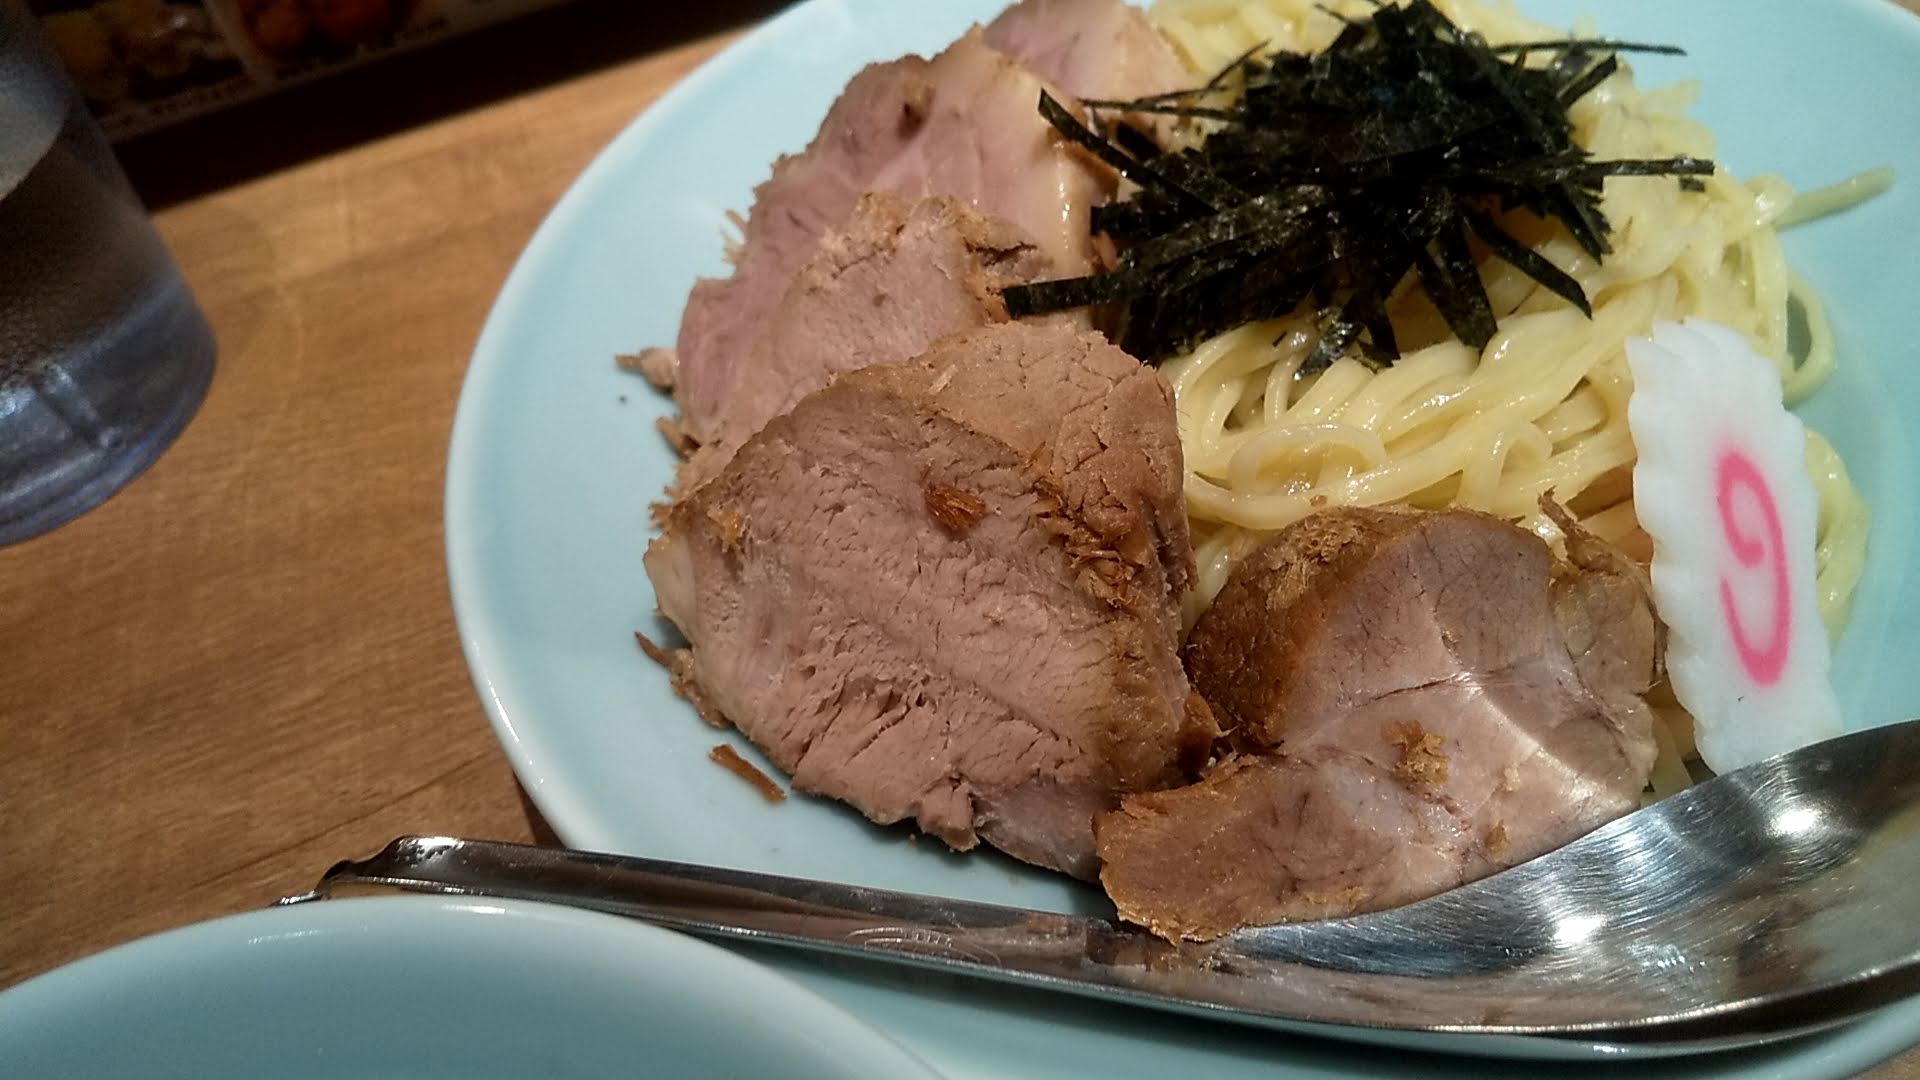 NoodleStandTokyoのTOKYO肉もり中華のチャーシューアップ写真